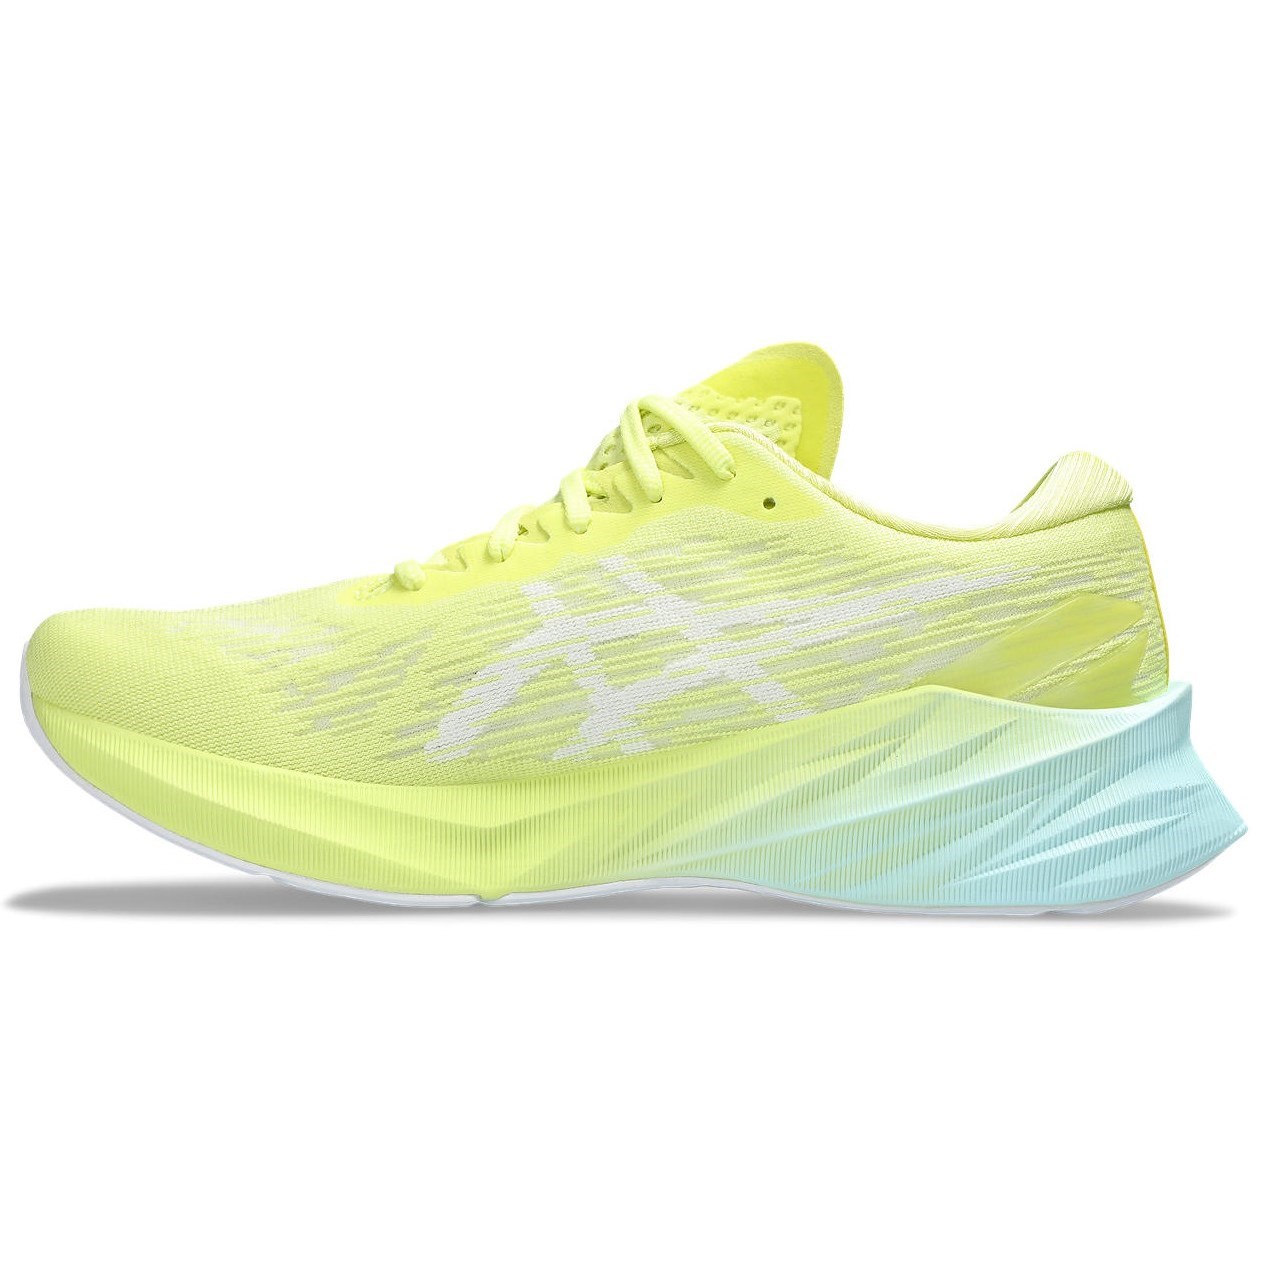 Asics NovaBlast 3 - Mens Running Shoes - Glow Yellow/White | Sportitude